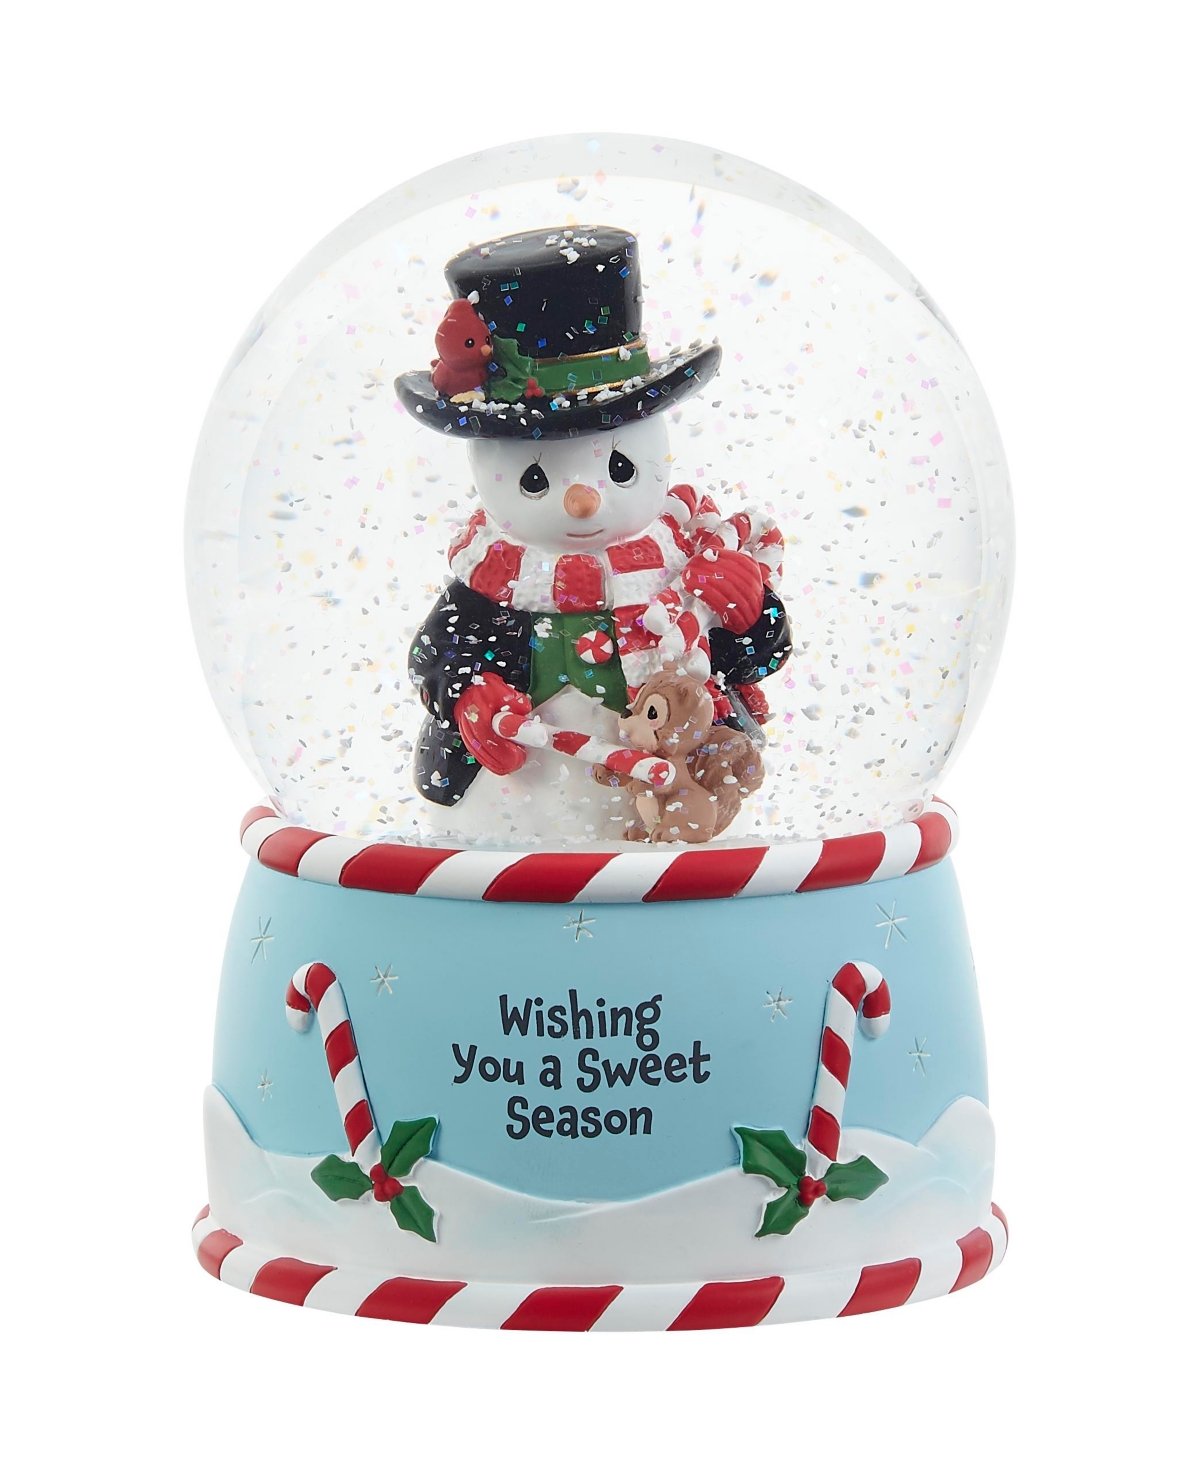 221103 Wishing You a Sweet Season Annual Snowman Musical Resin, Glass Snow Globe - Multicolor